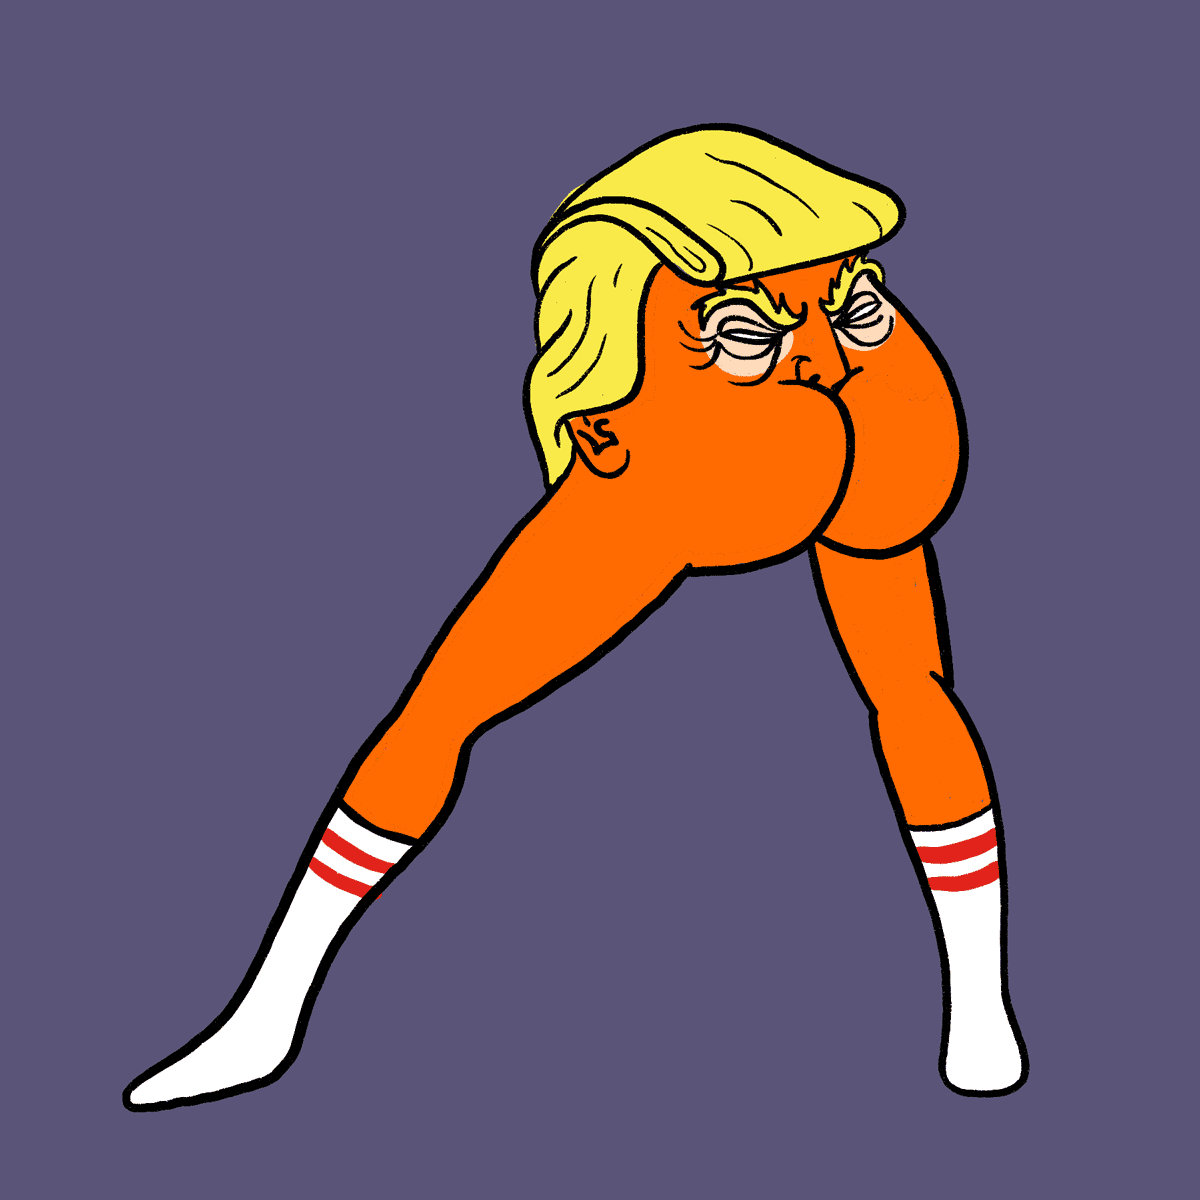 animation,trump,dance,butt,dat ass,illustration,funny trump,party,ass,election 2016,drumpf,chris piascik,chrispiascik,datassdoe